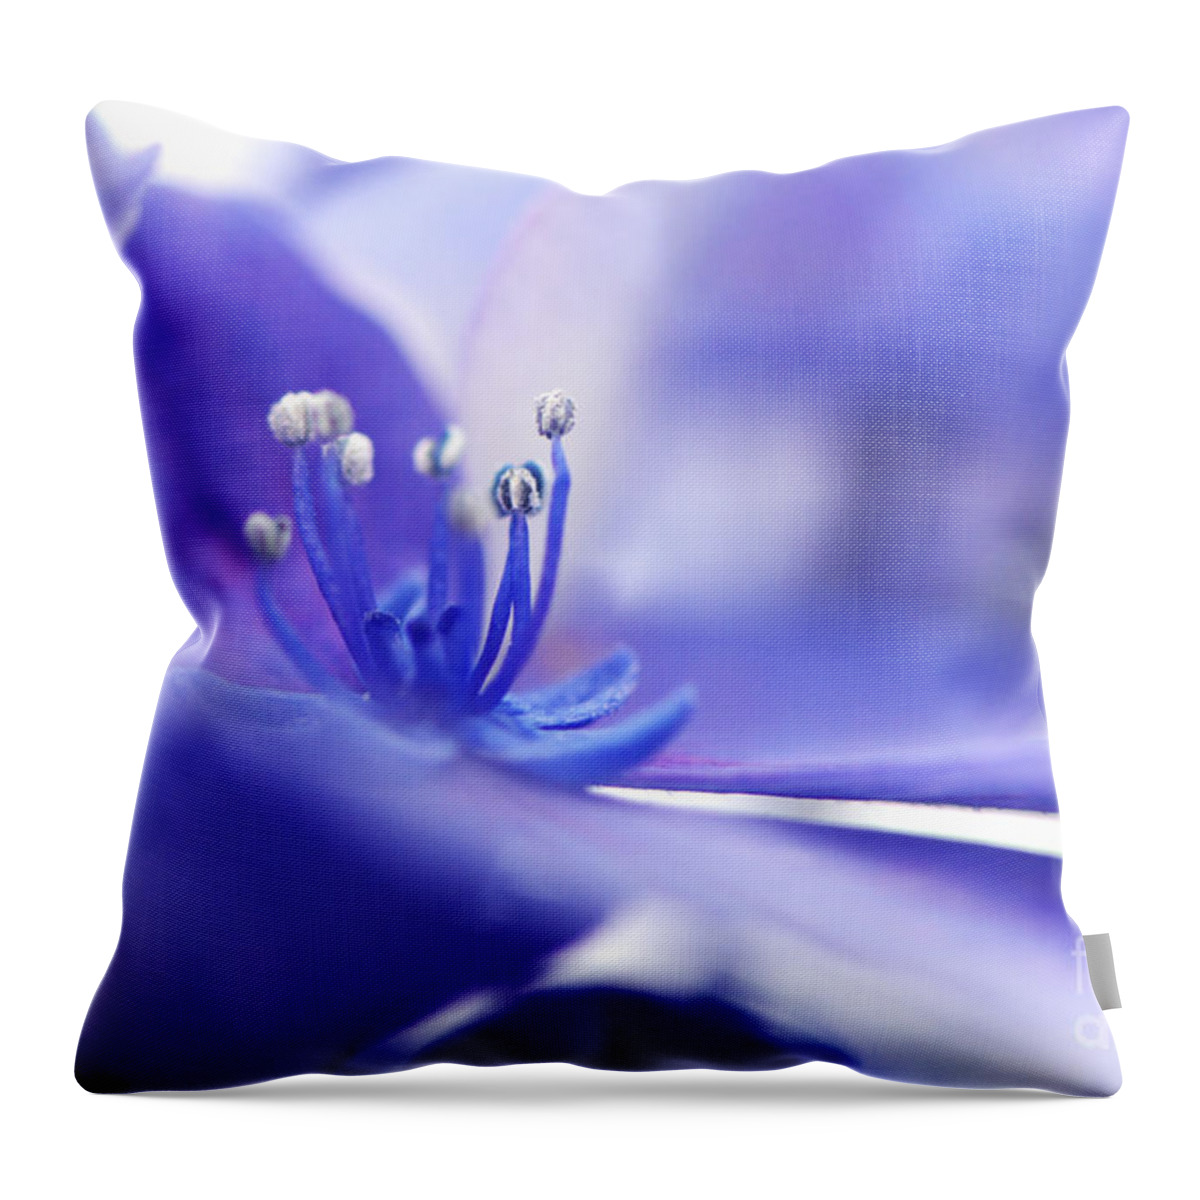 Hydrangea Throw Pillow featuring the photograph Hydrangea closeup by Sharon Talson